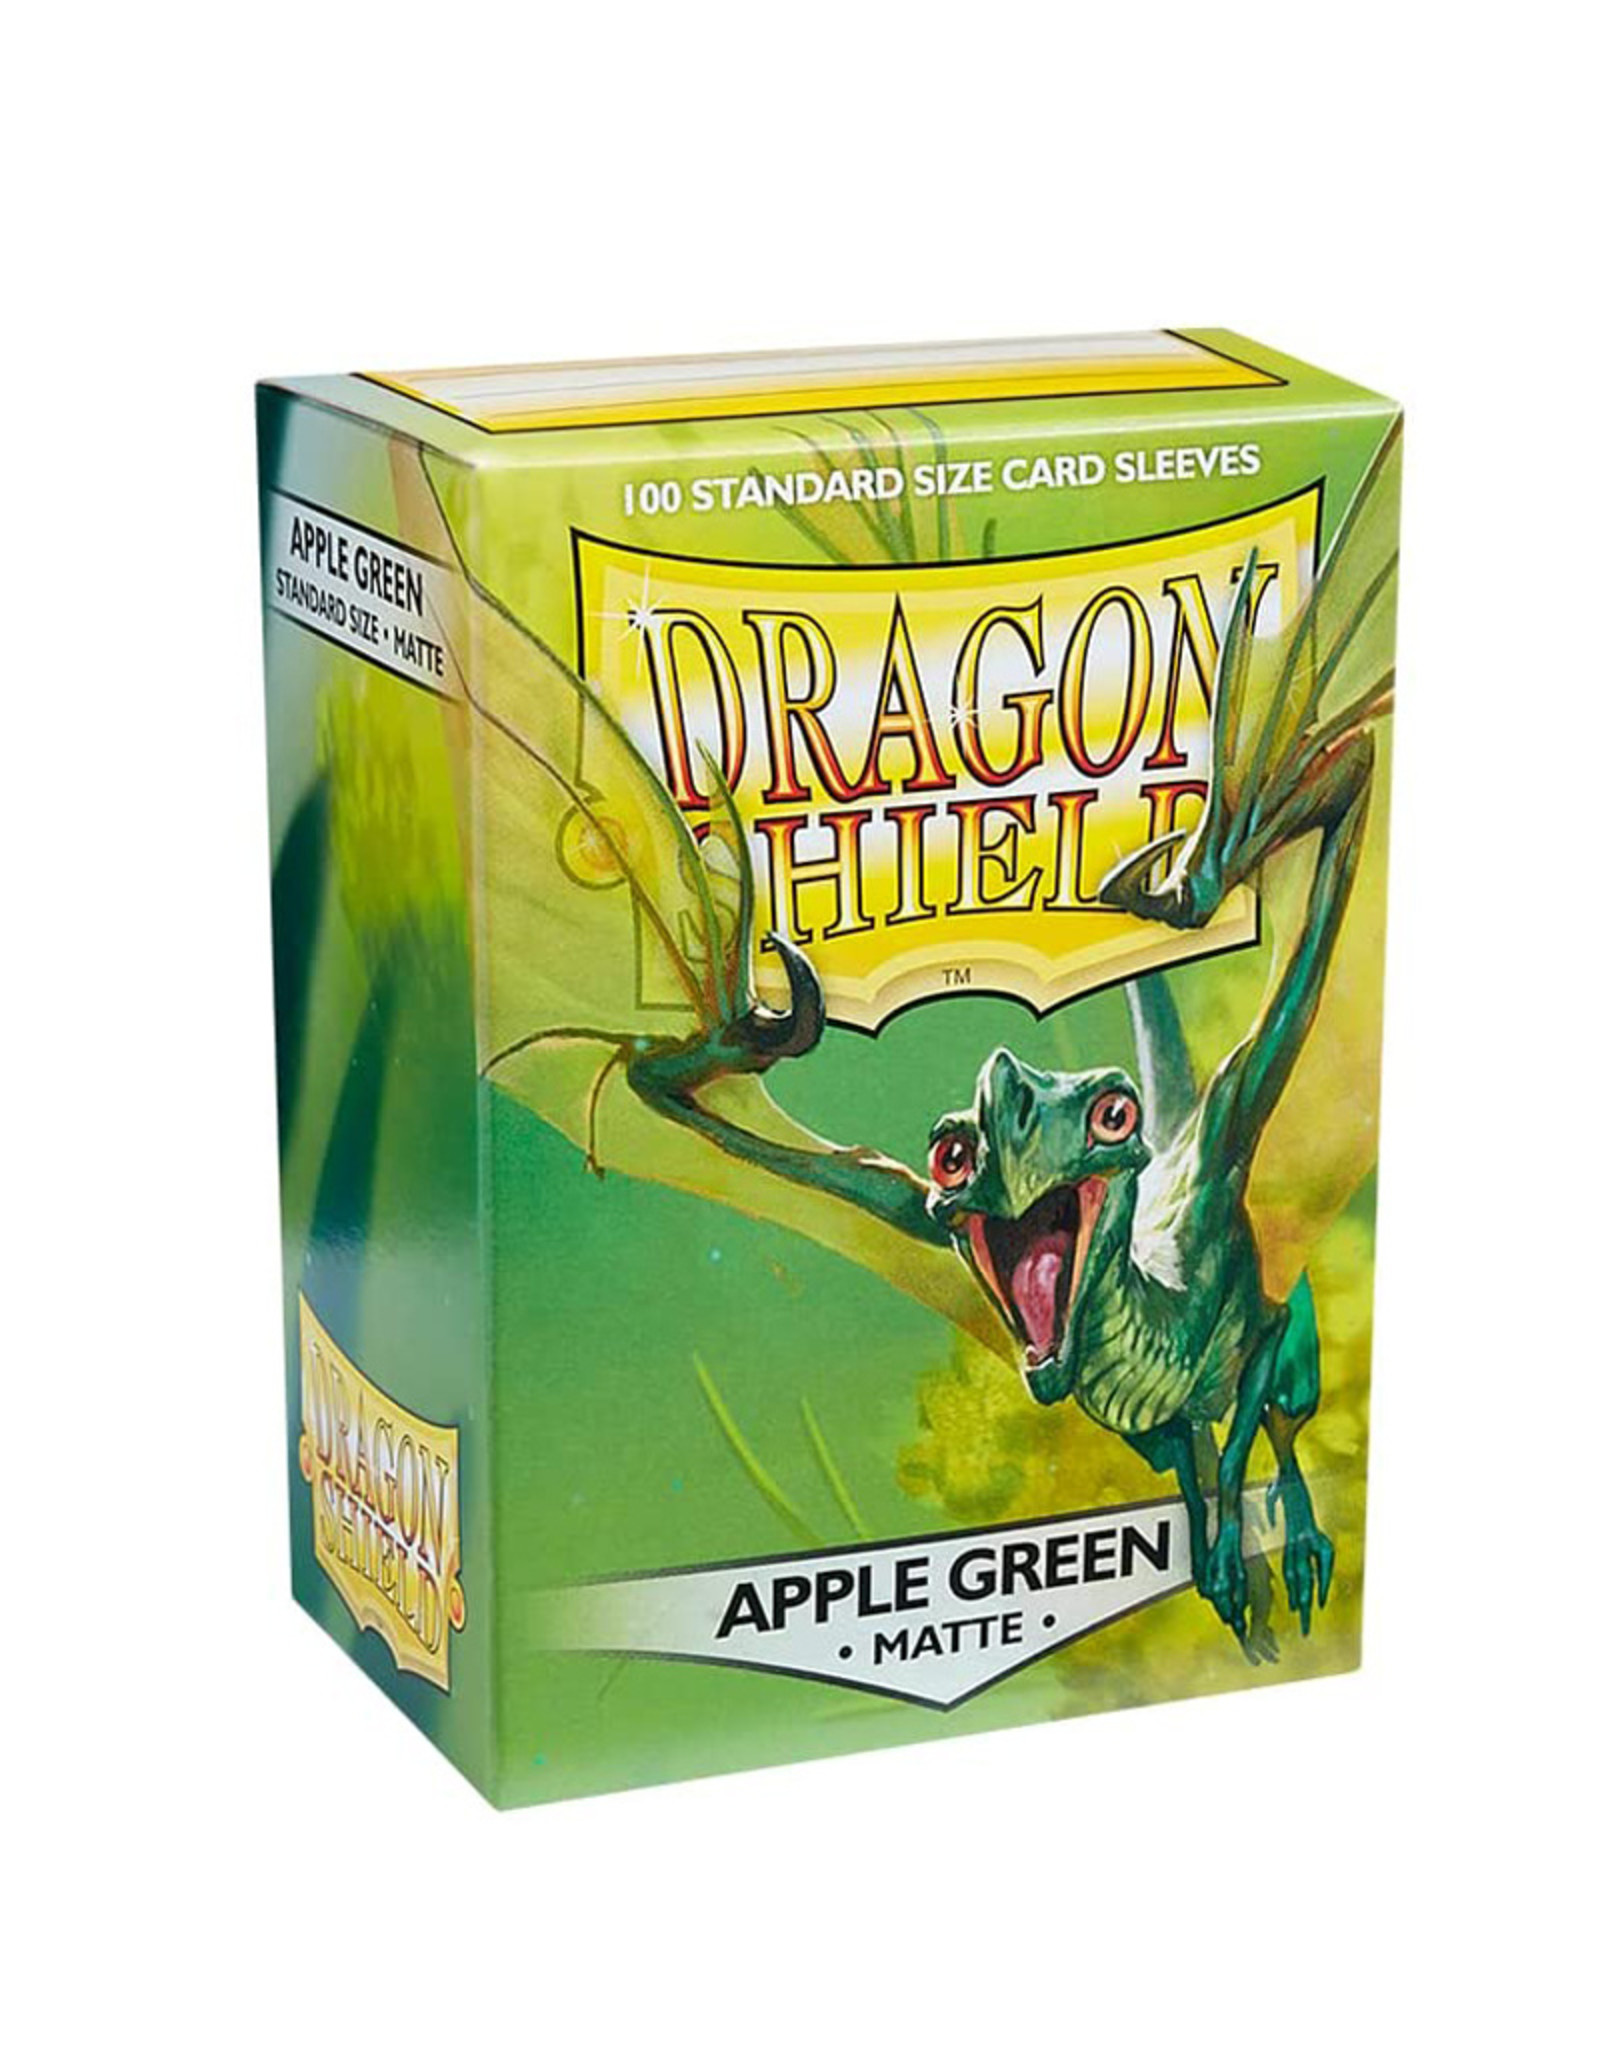 Arcane TinMen Dragon Shield Apple Green Matte Sleeves